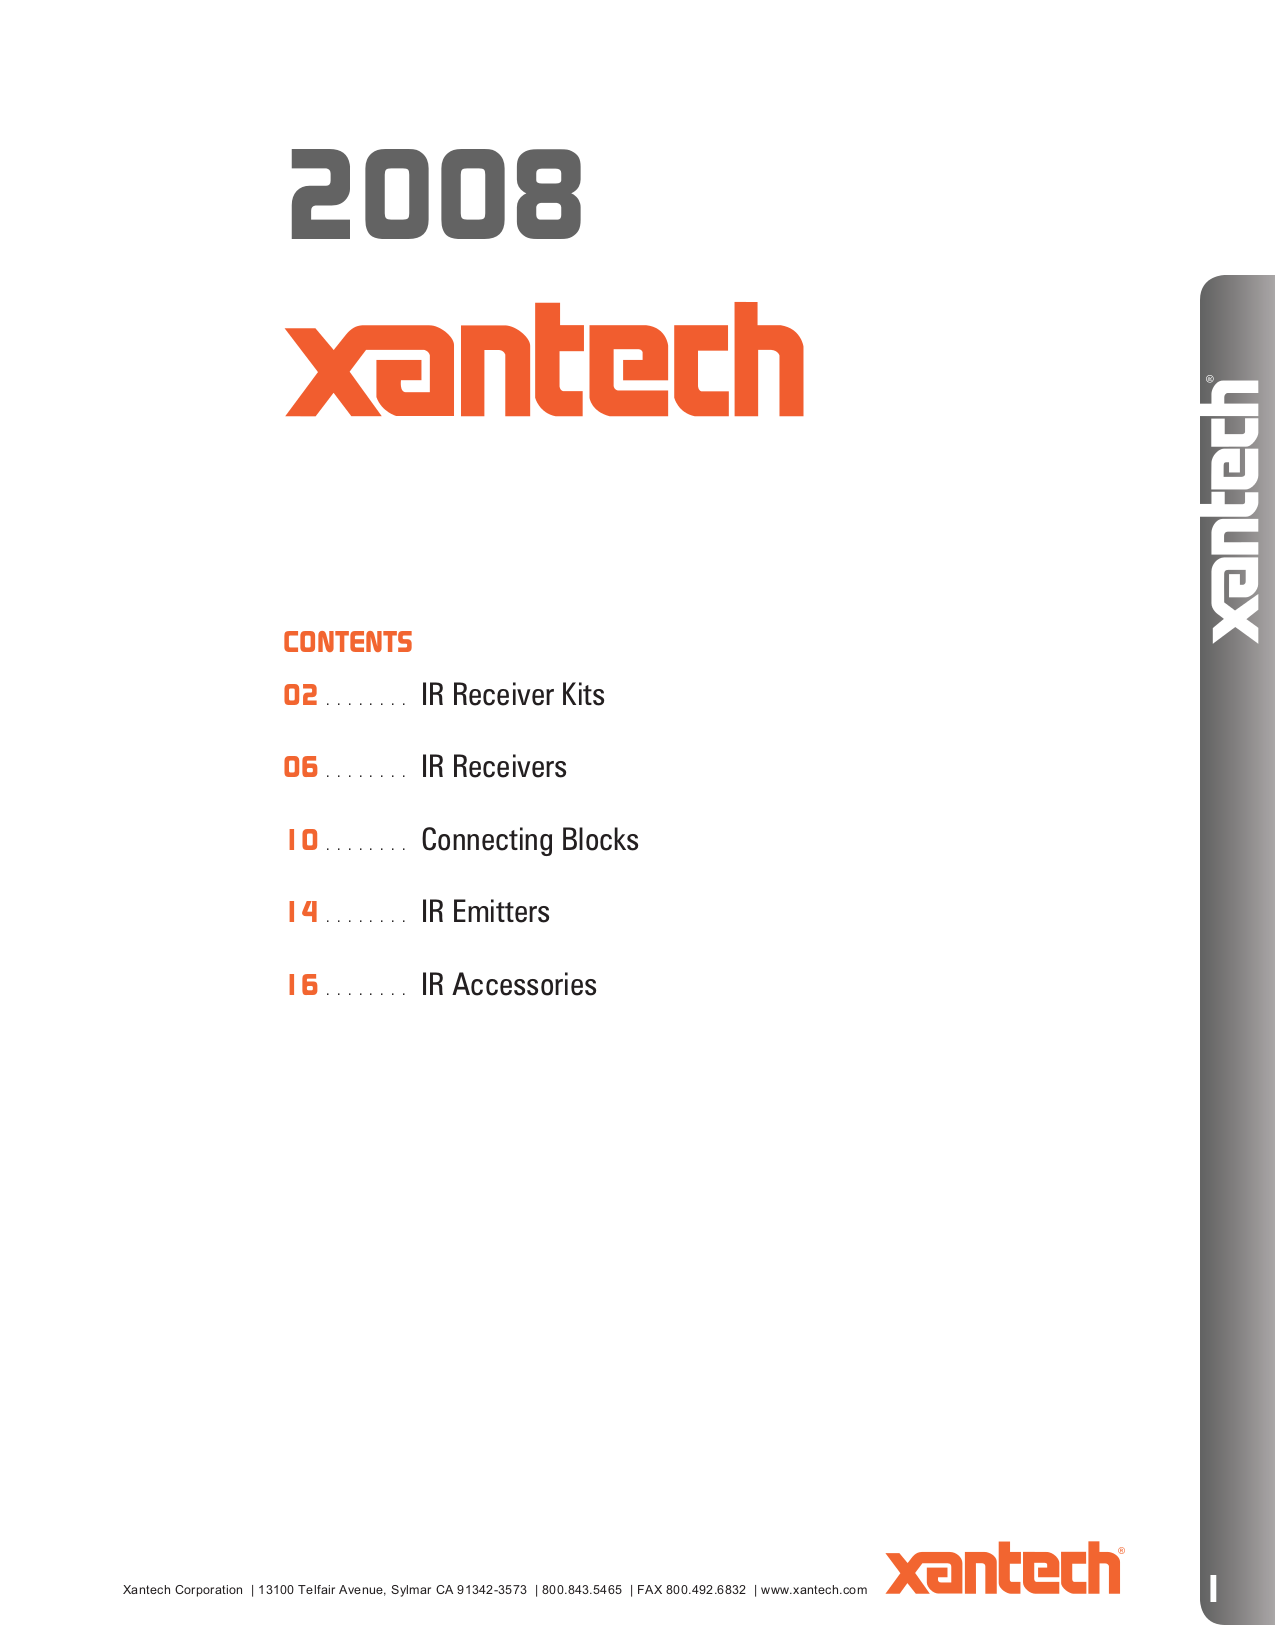 xantech ir receiver wiring diagram